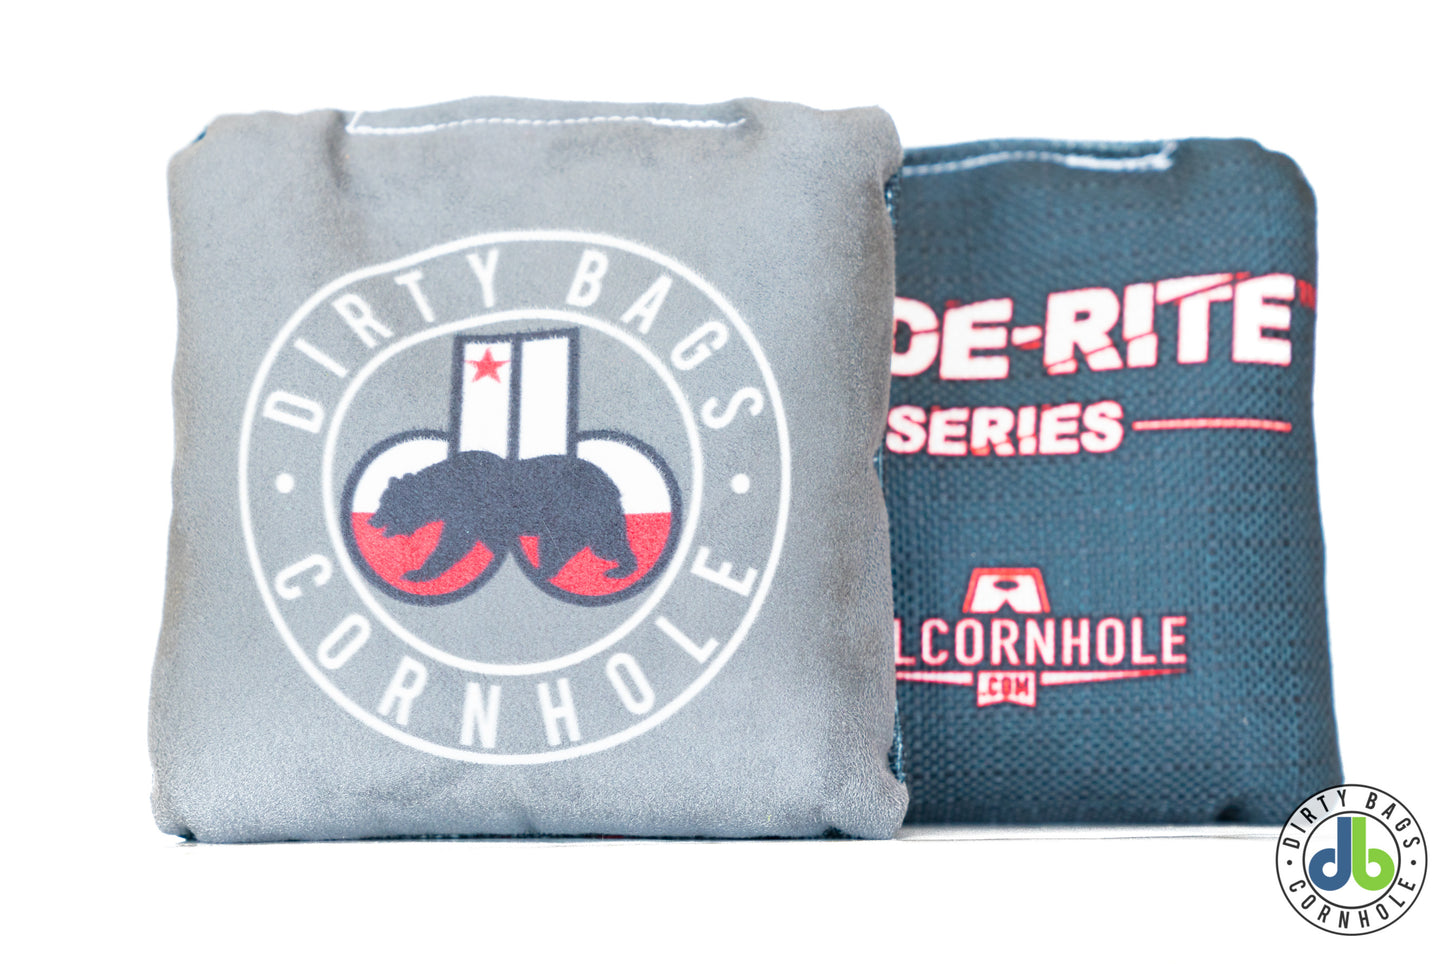 Slide Rite Cornhole Bags - db California Edition (set of 4 bags)